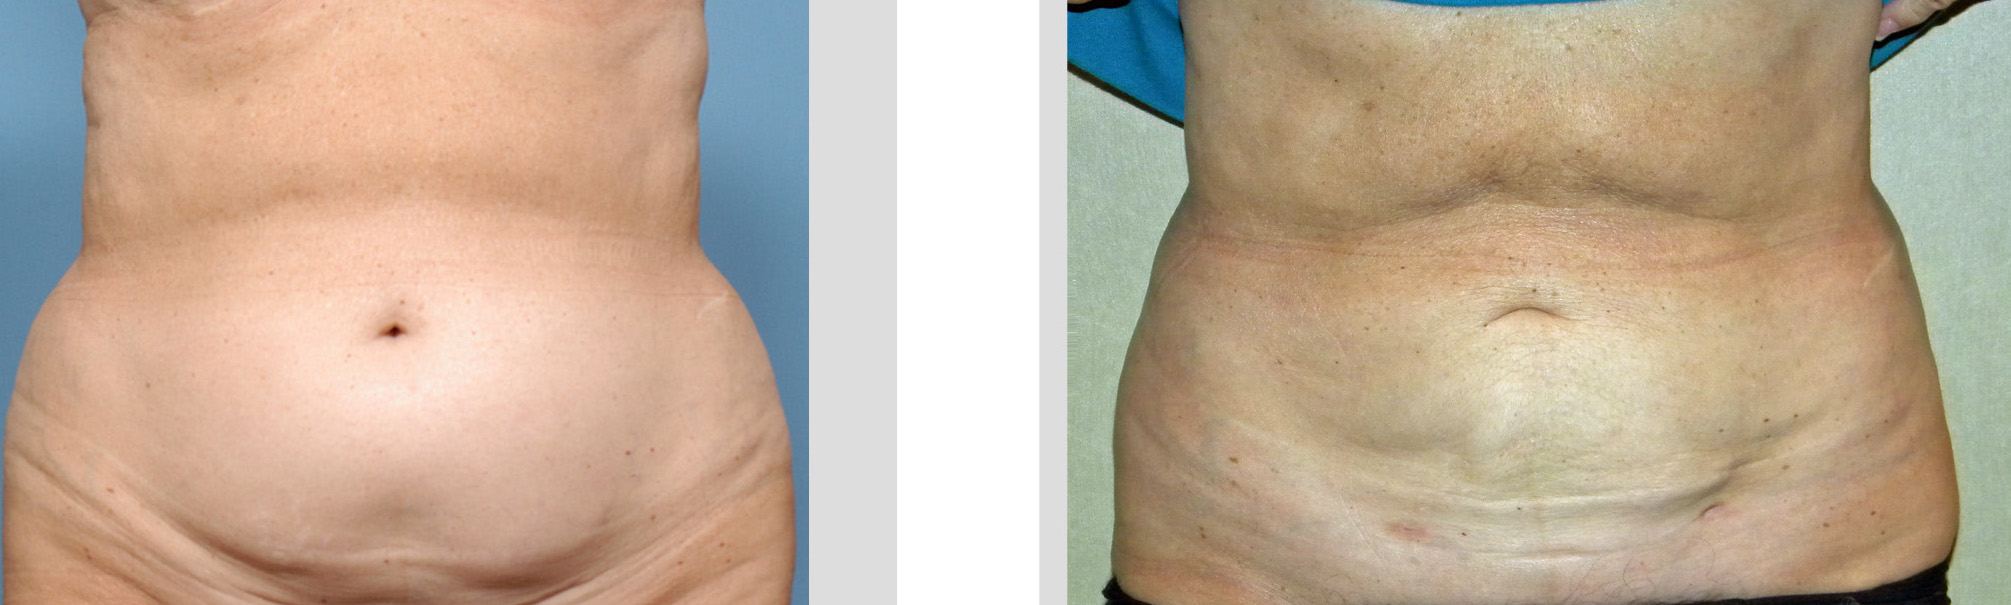 Abdominal Liposuction - Jelly Belly vs Watermelon Bellies - Explore Plastic  Surgery